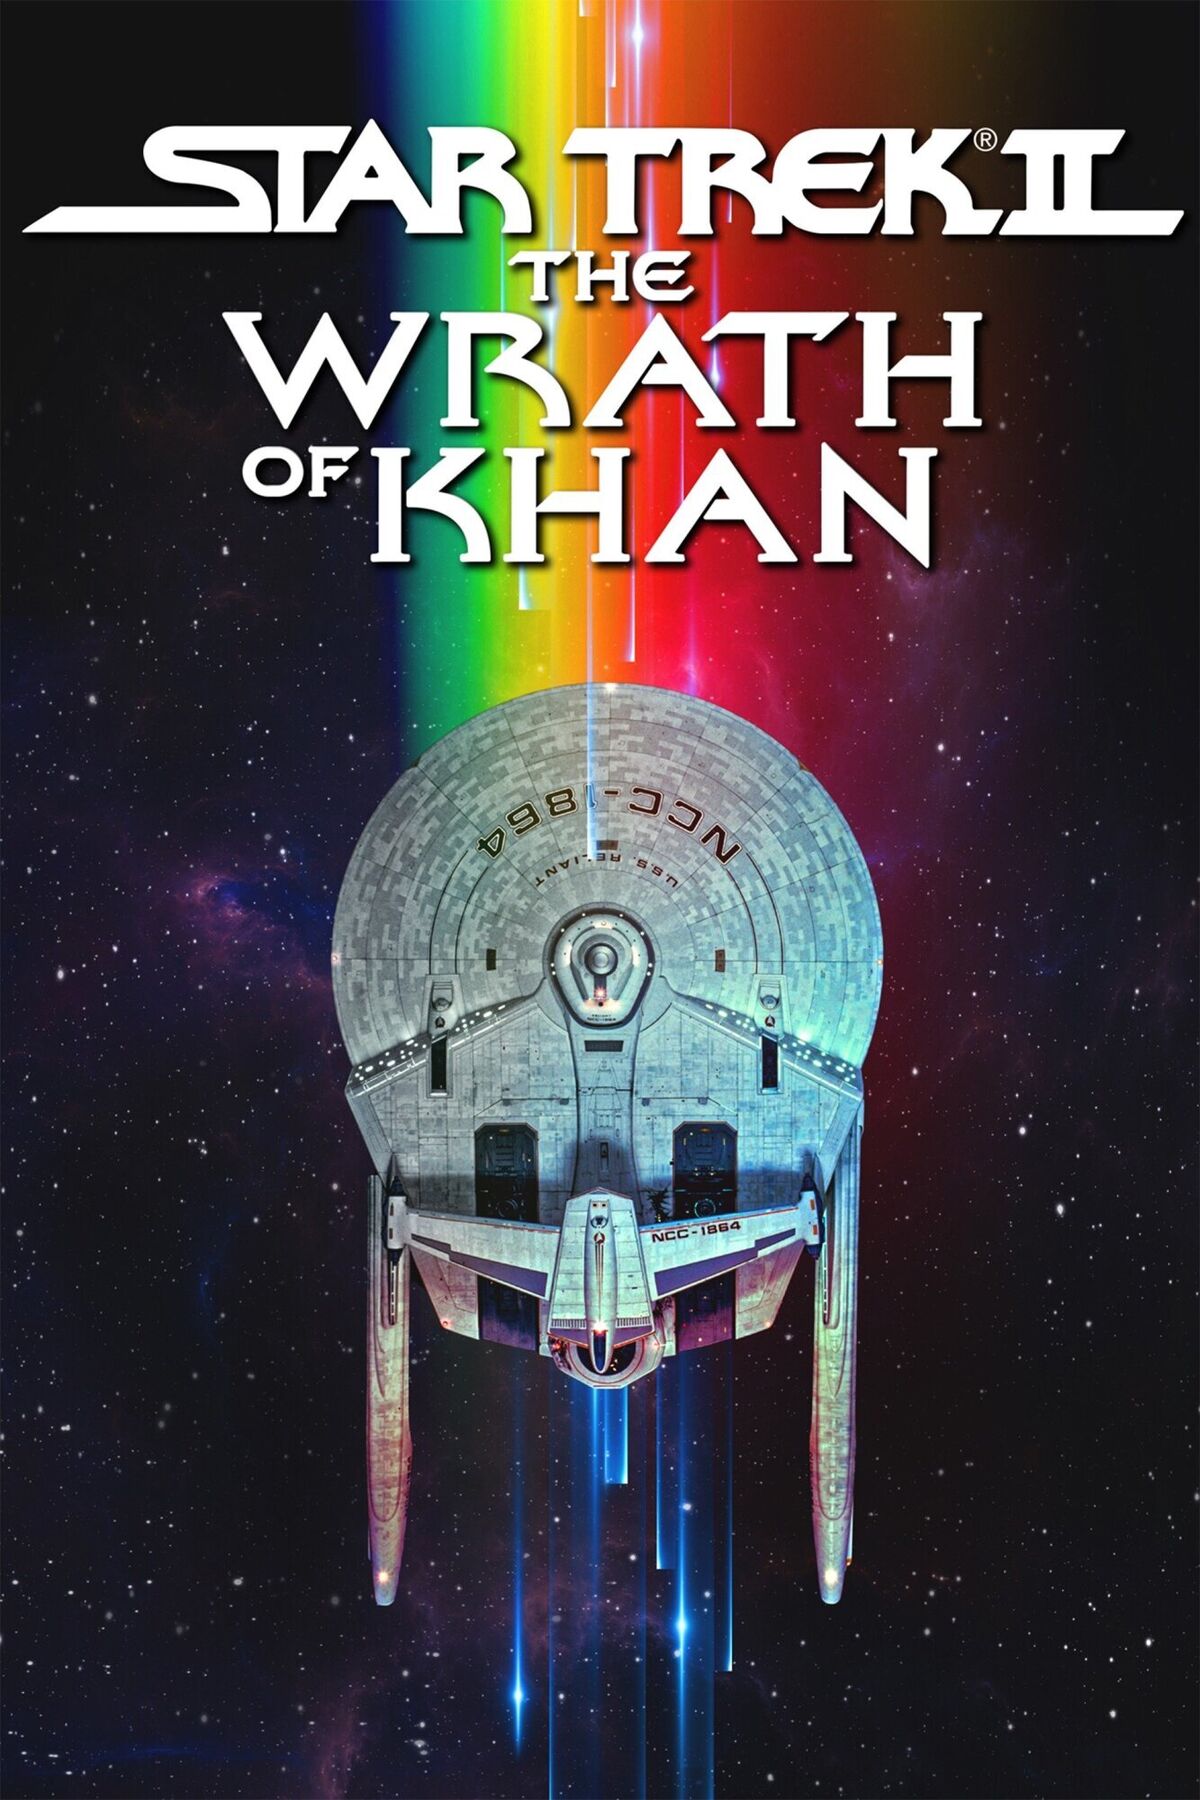 star trek ii the wrath of khan memory alpha